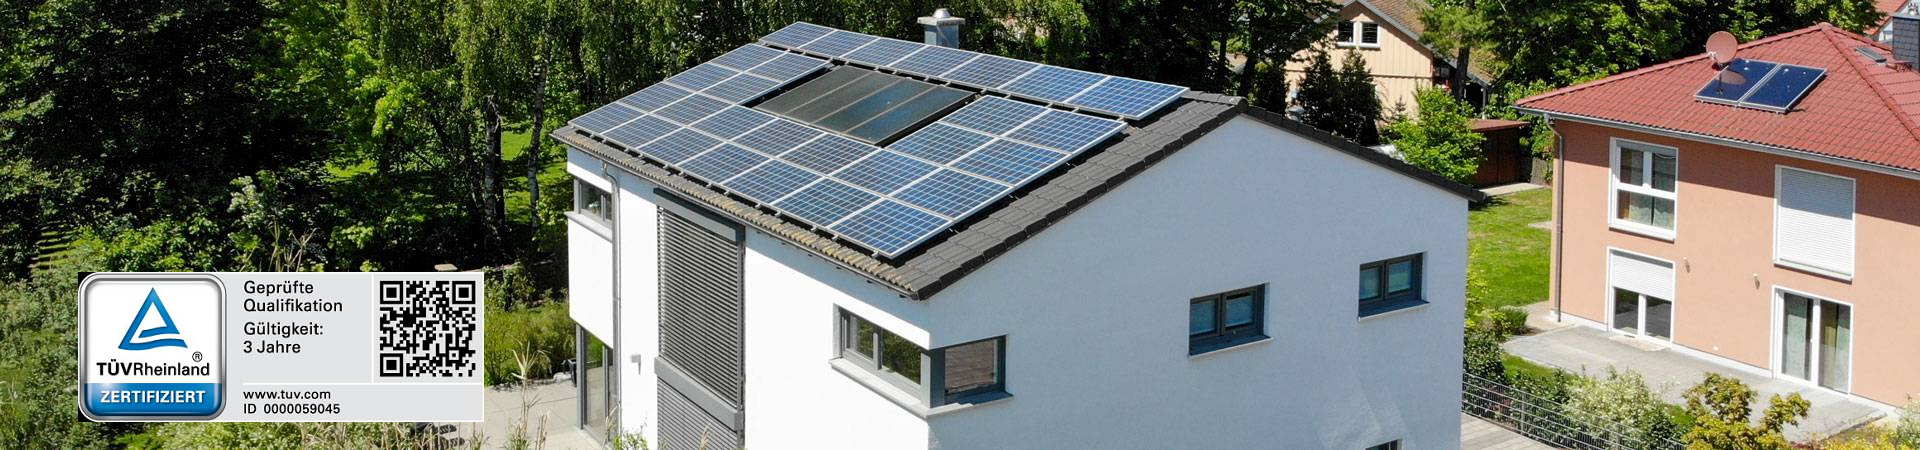 photovoltaik lüneburg